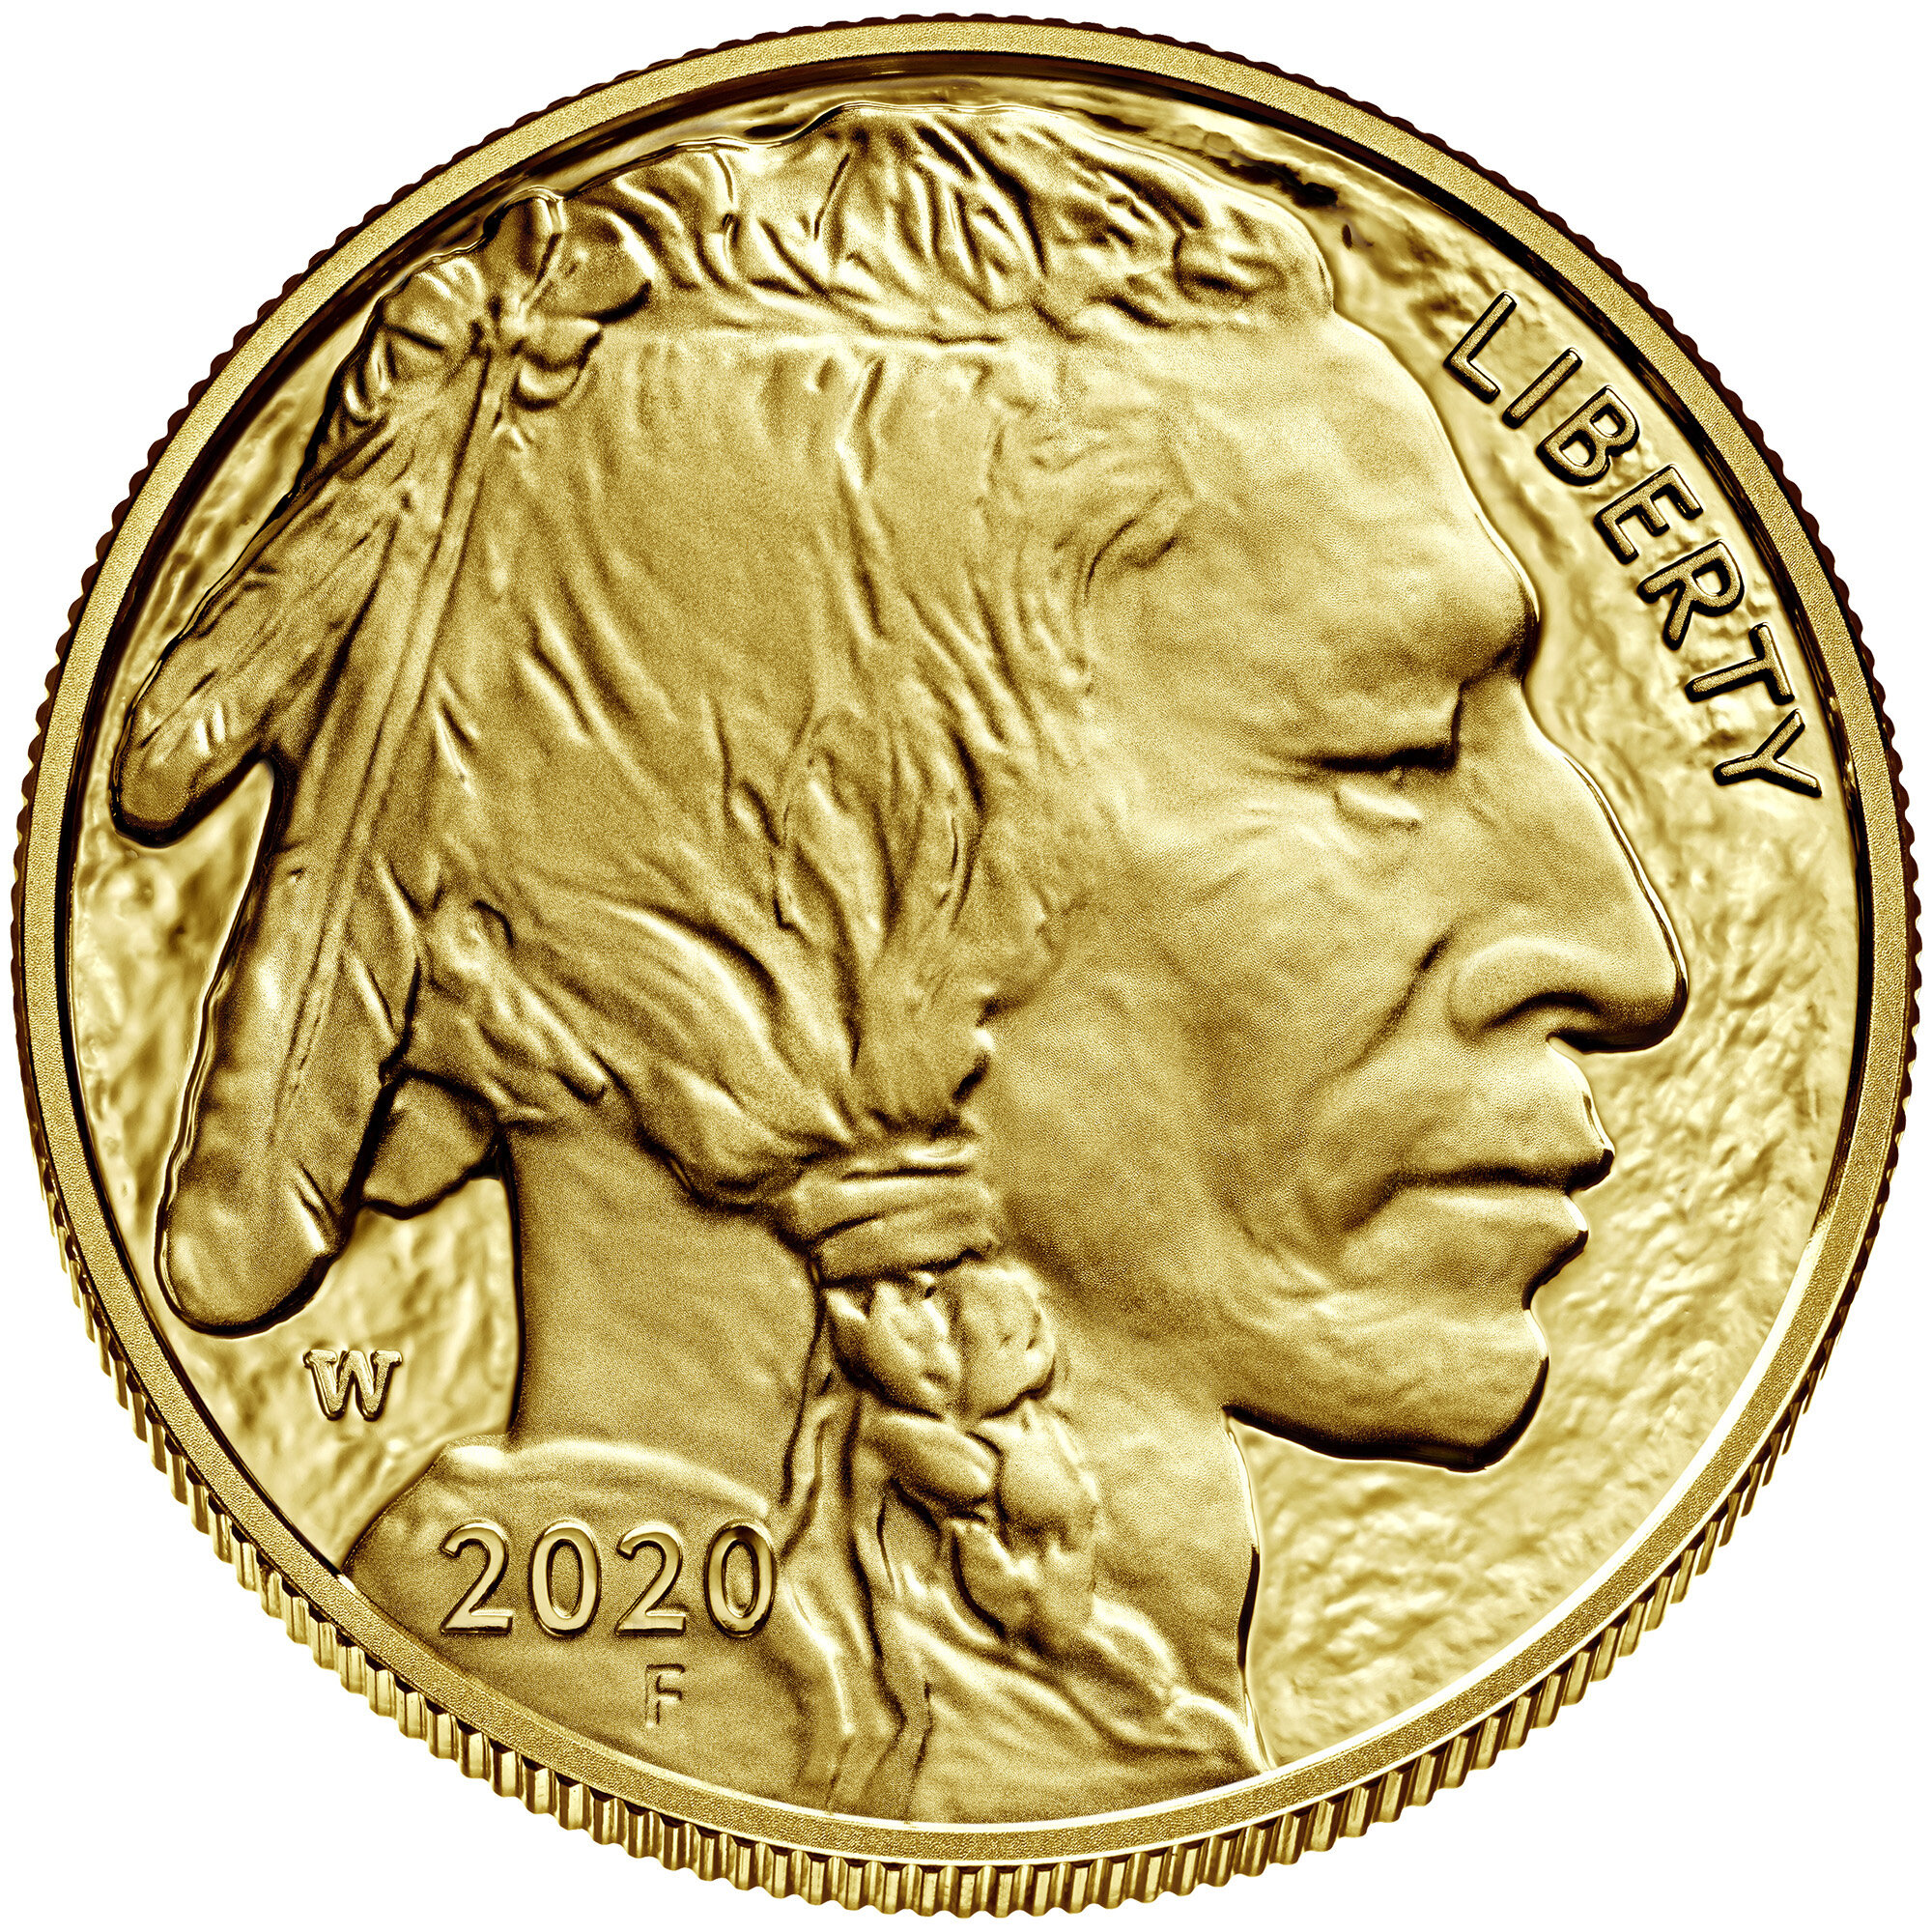 Купить монеты доллары сша. Монета Бизон Буффало золото. Золотая монета американский Буффало 2020. Буффало золото монета США. Американский Бизон монета.